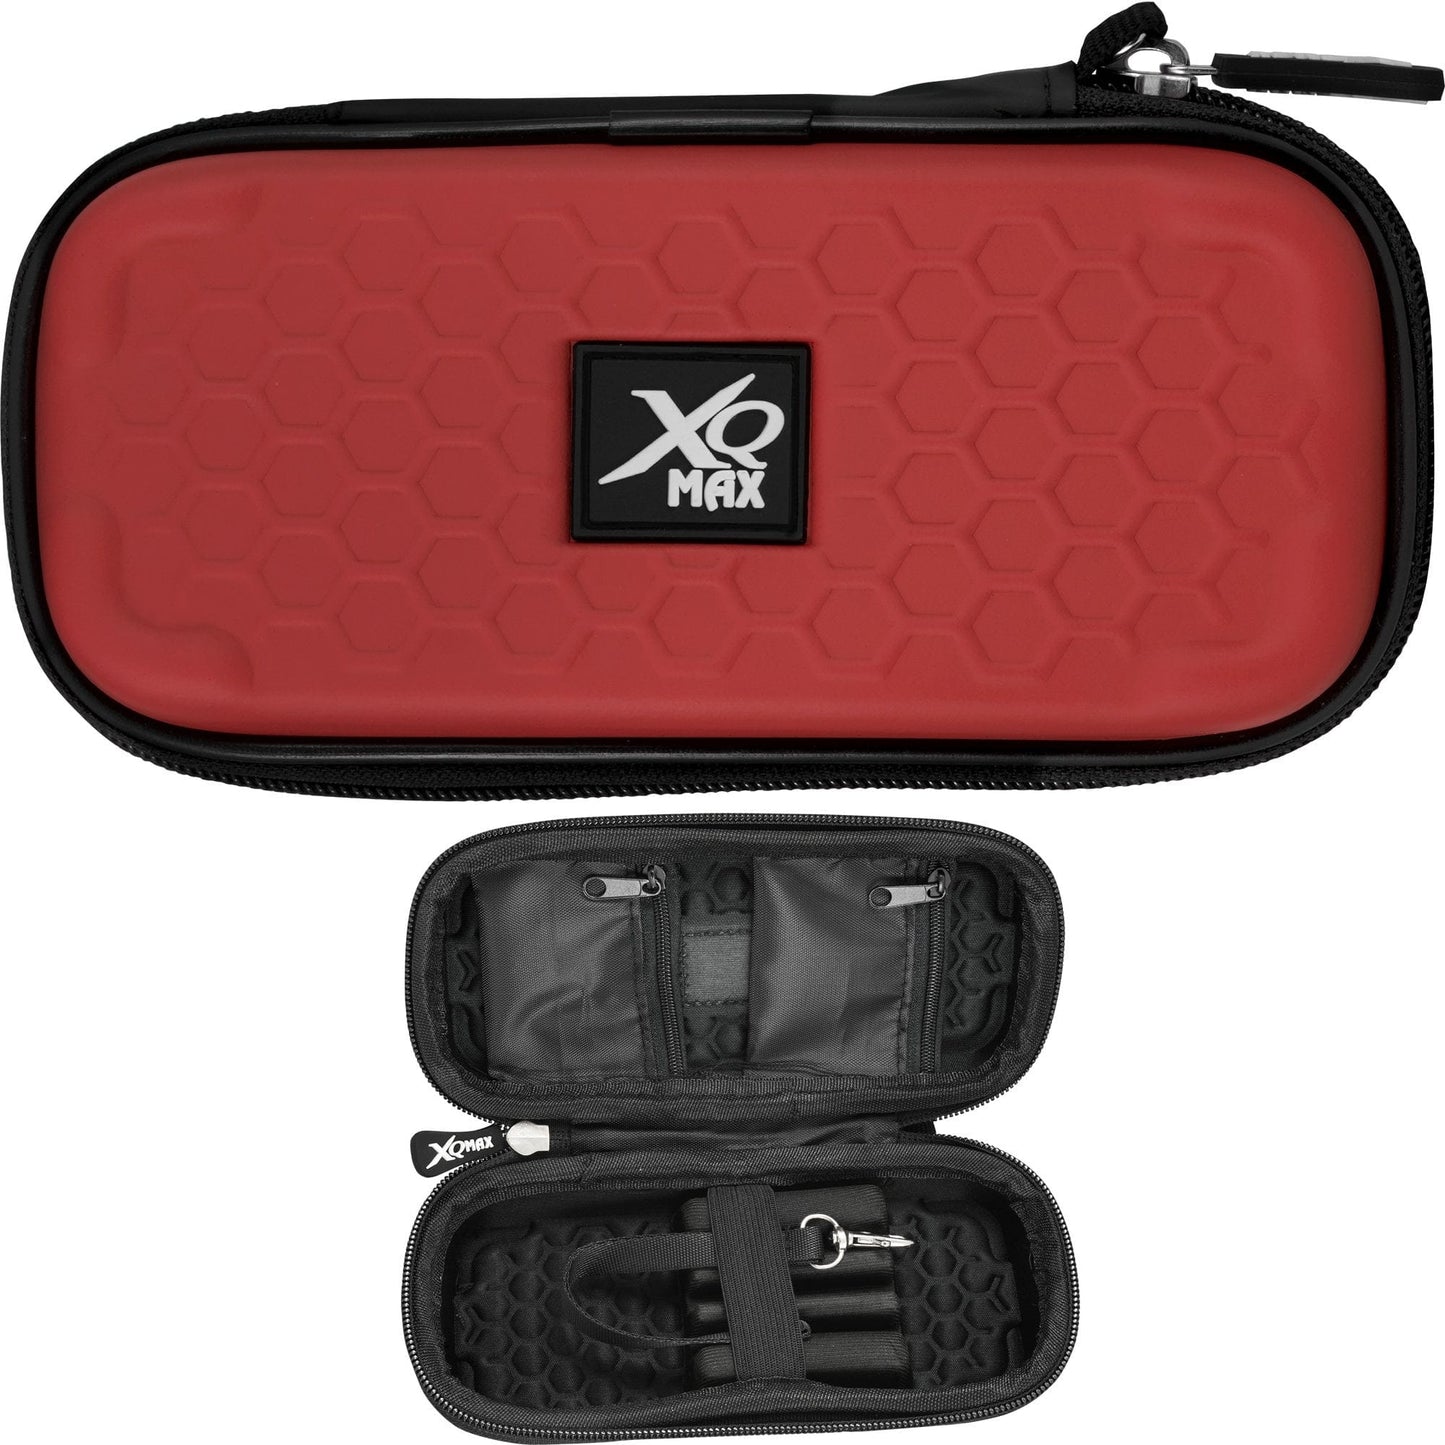 XQMax Darts Wallet - Compact - Small Red